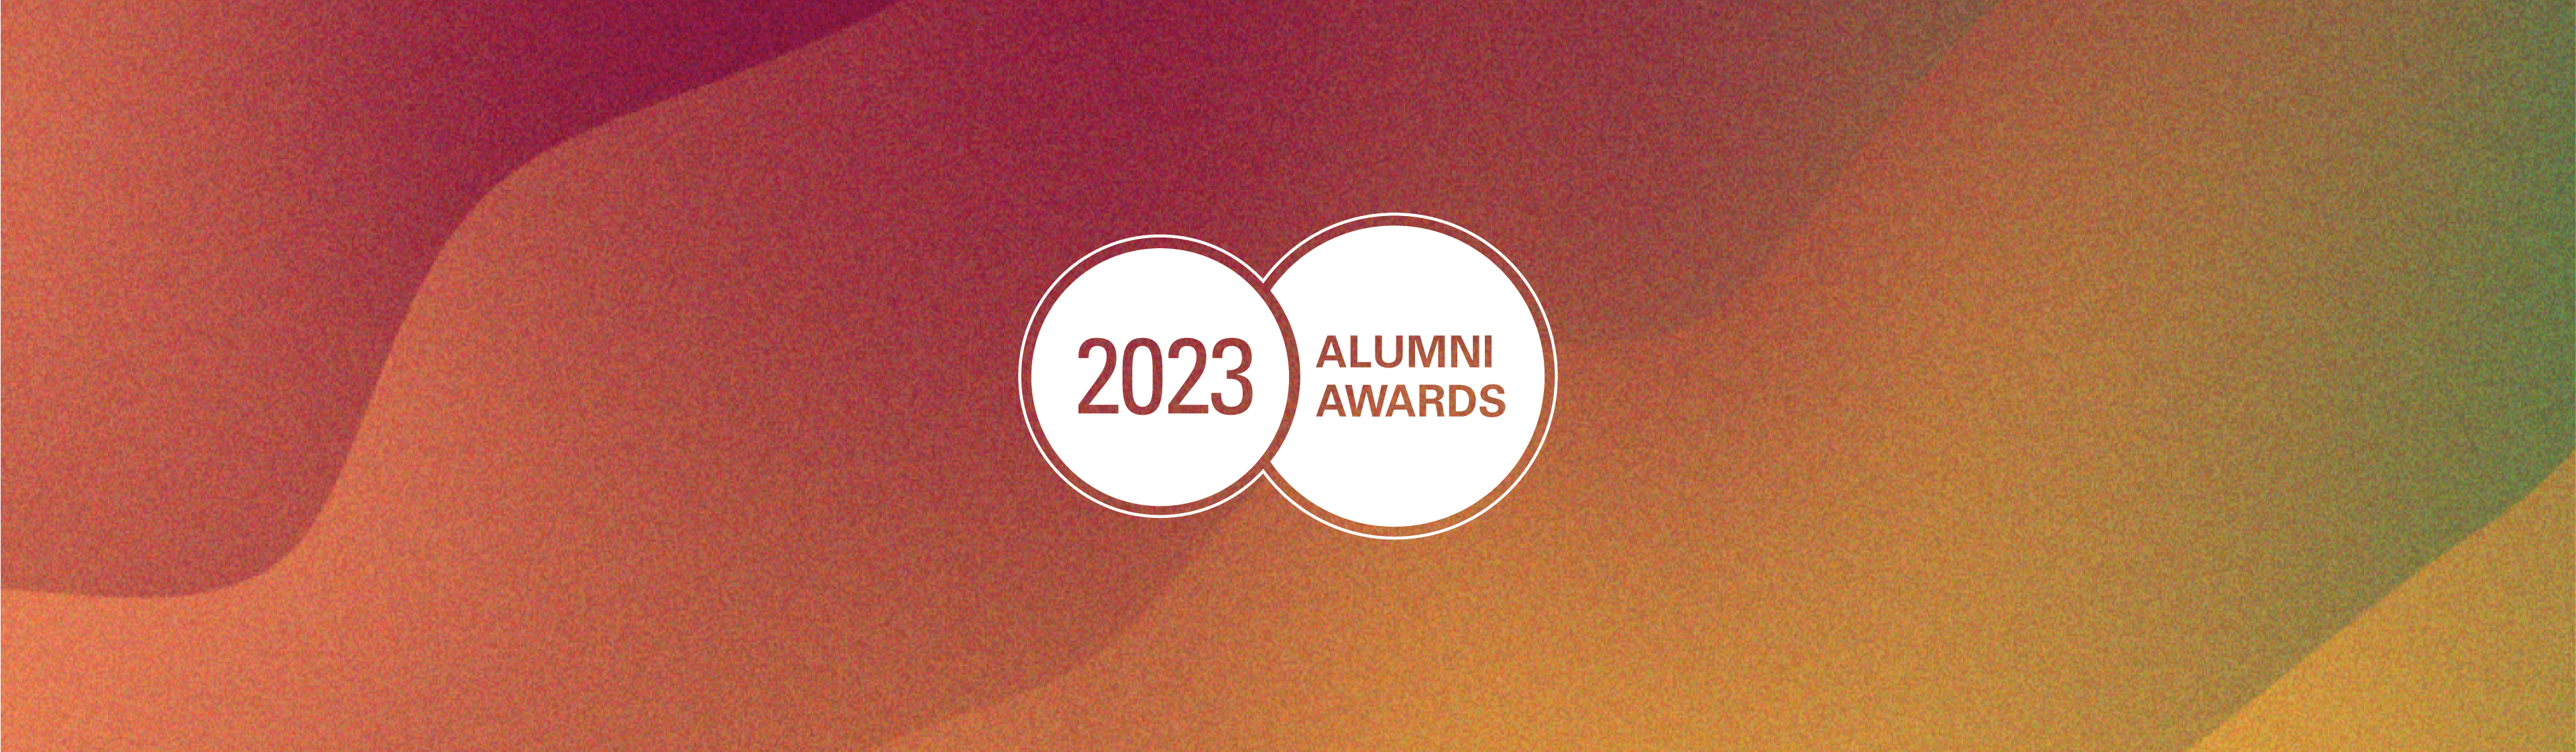 McMaster Alumni Community - Alumni Awards 2023